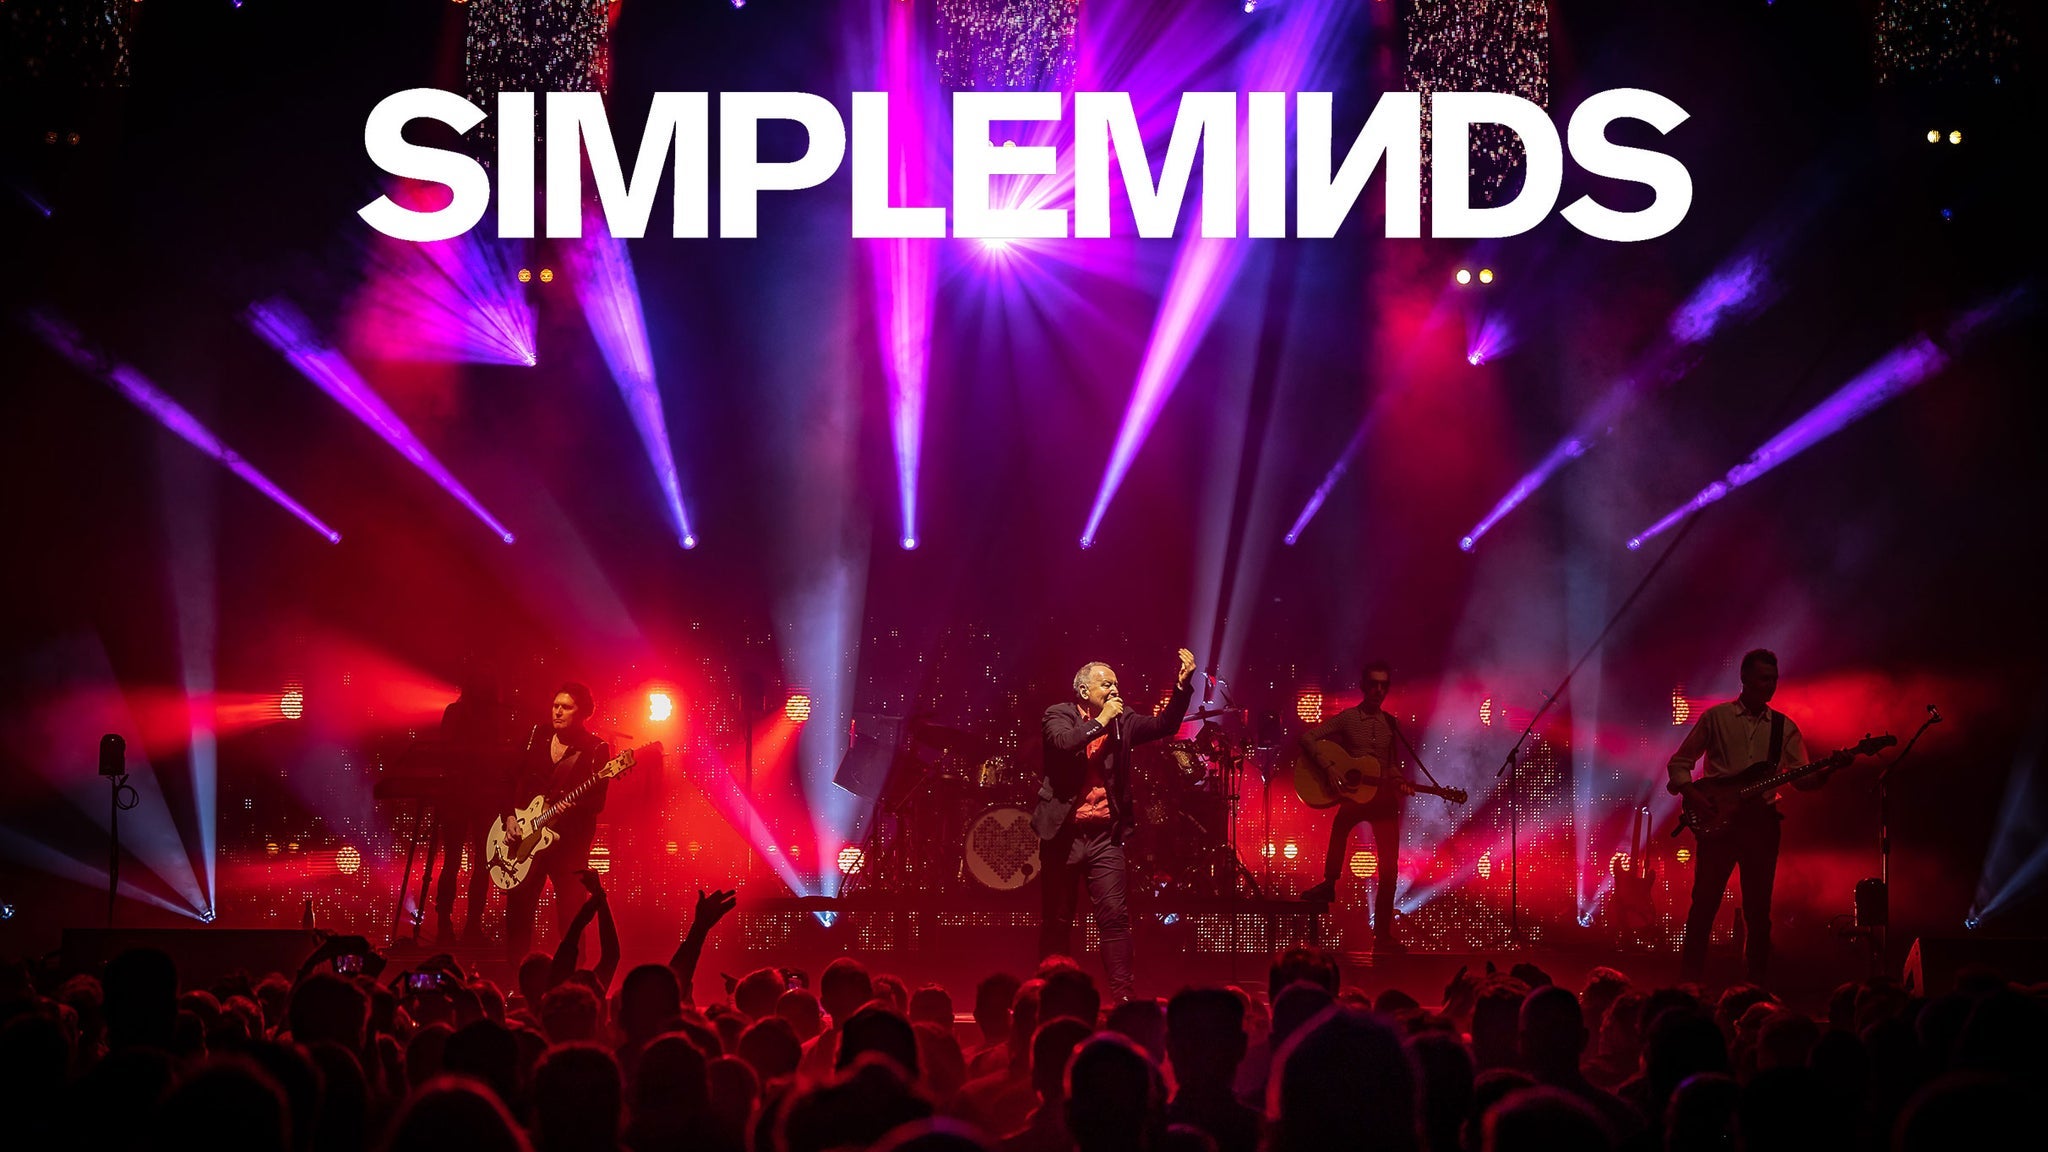 Simple Minds - Festival 1001 Músicas en la Alhambra